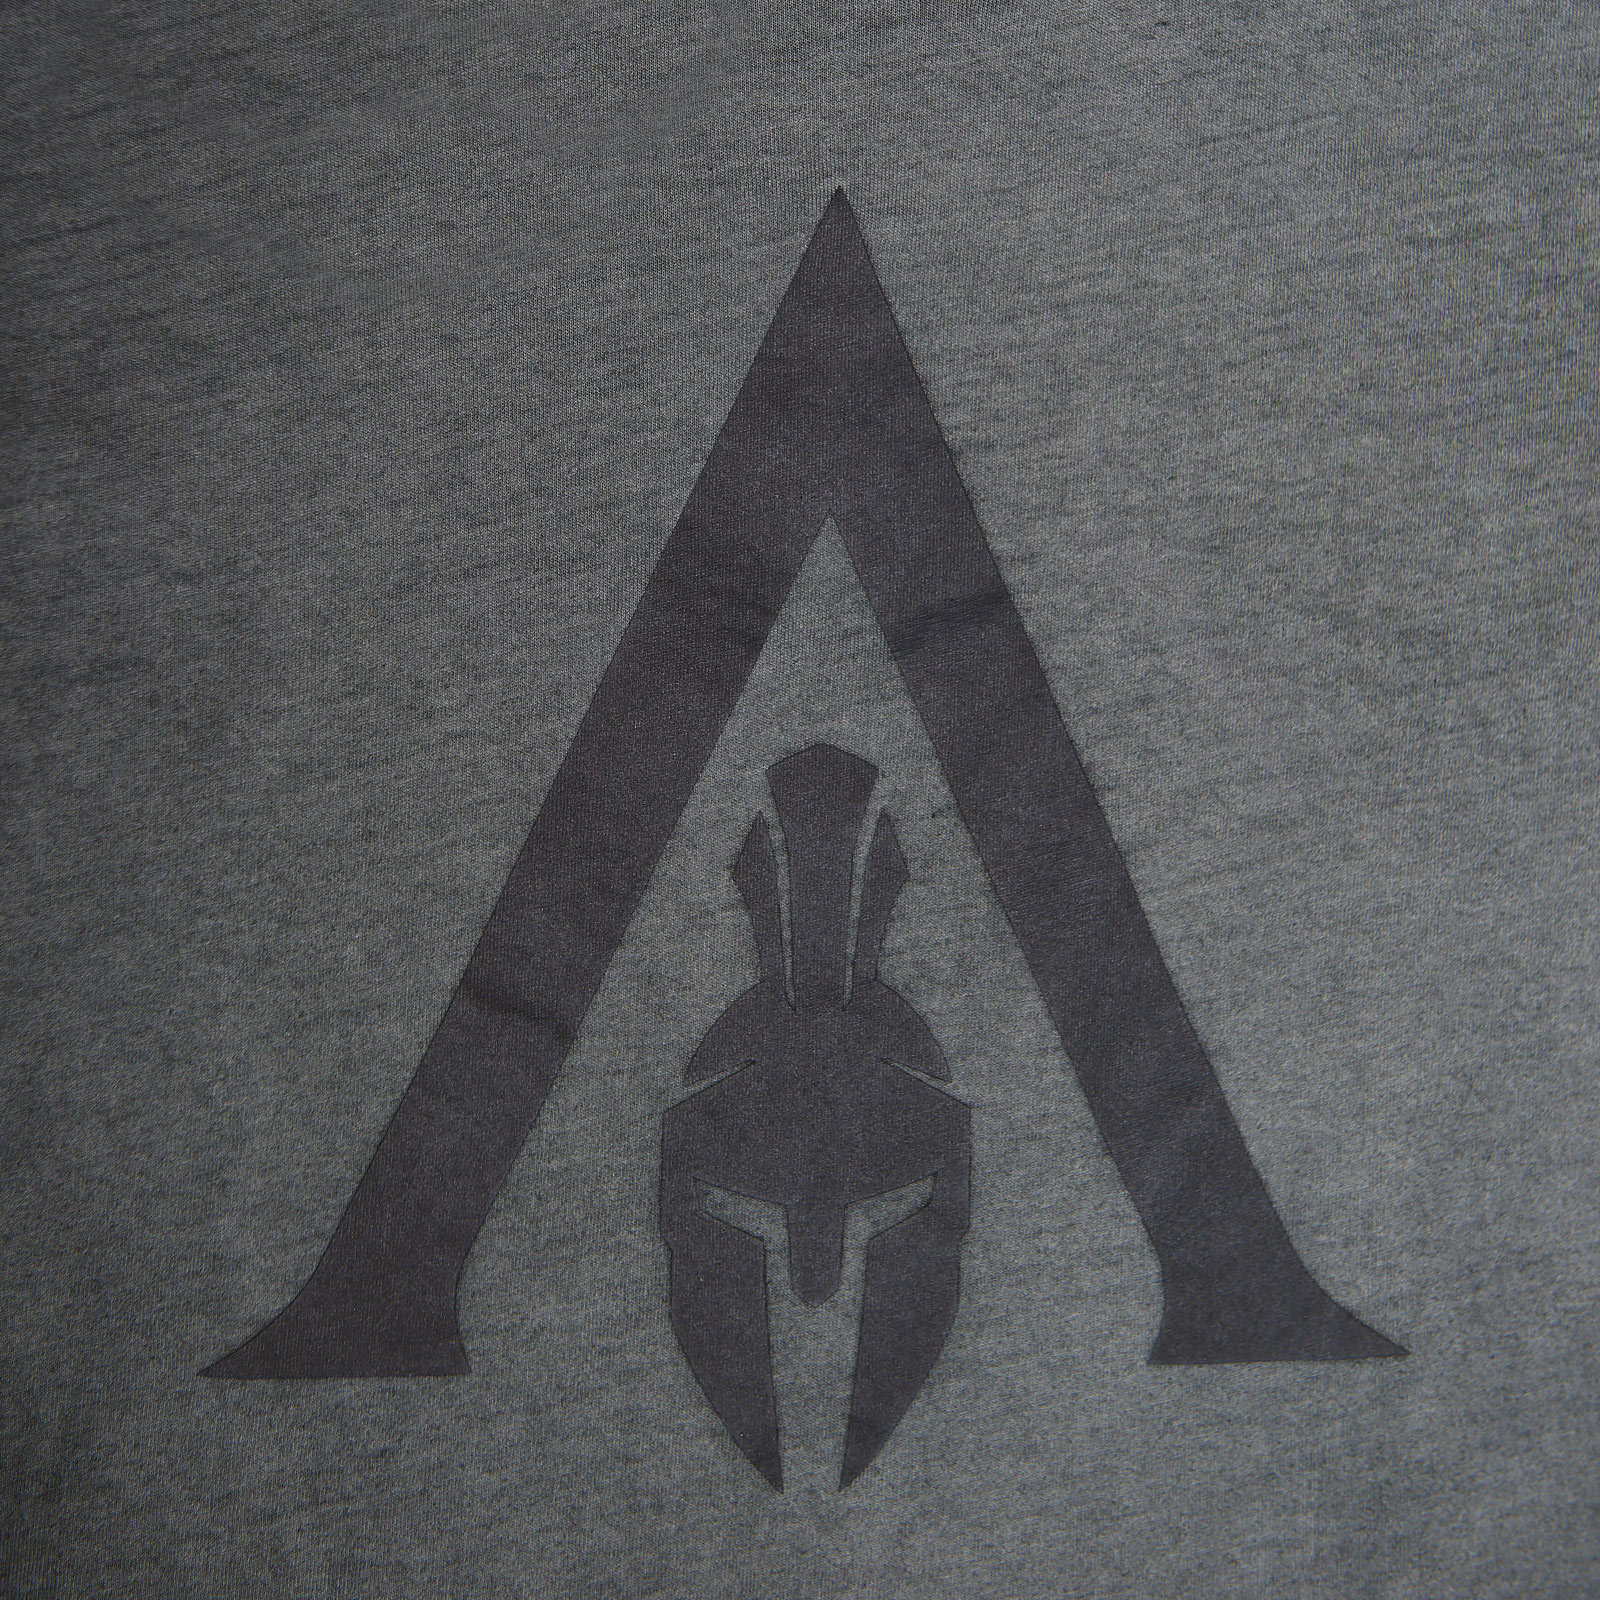 Assassins Creed - T-shirt logo Odyssey gris